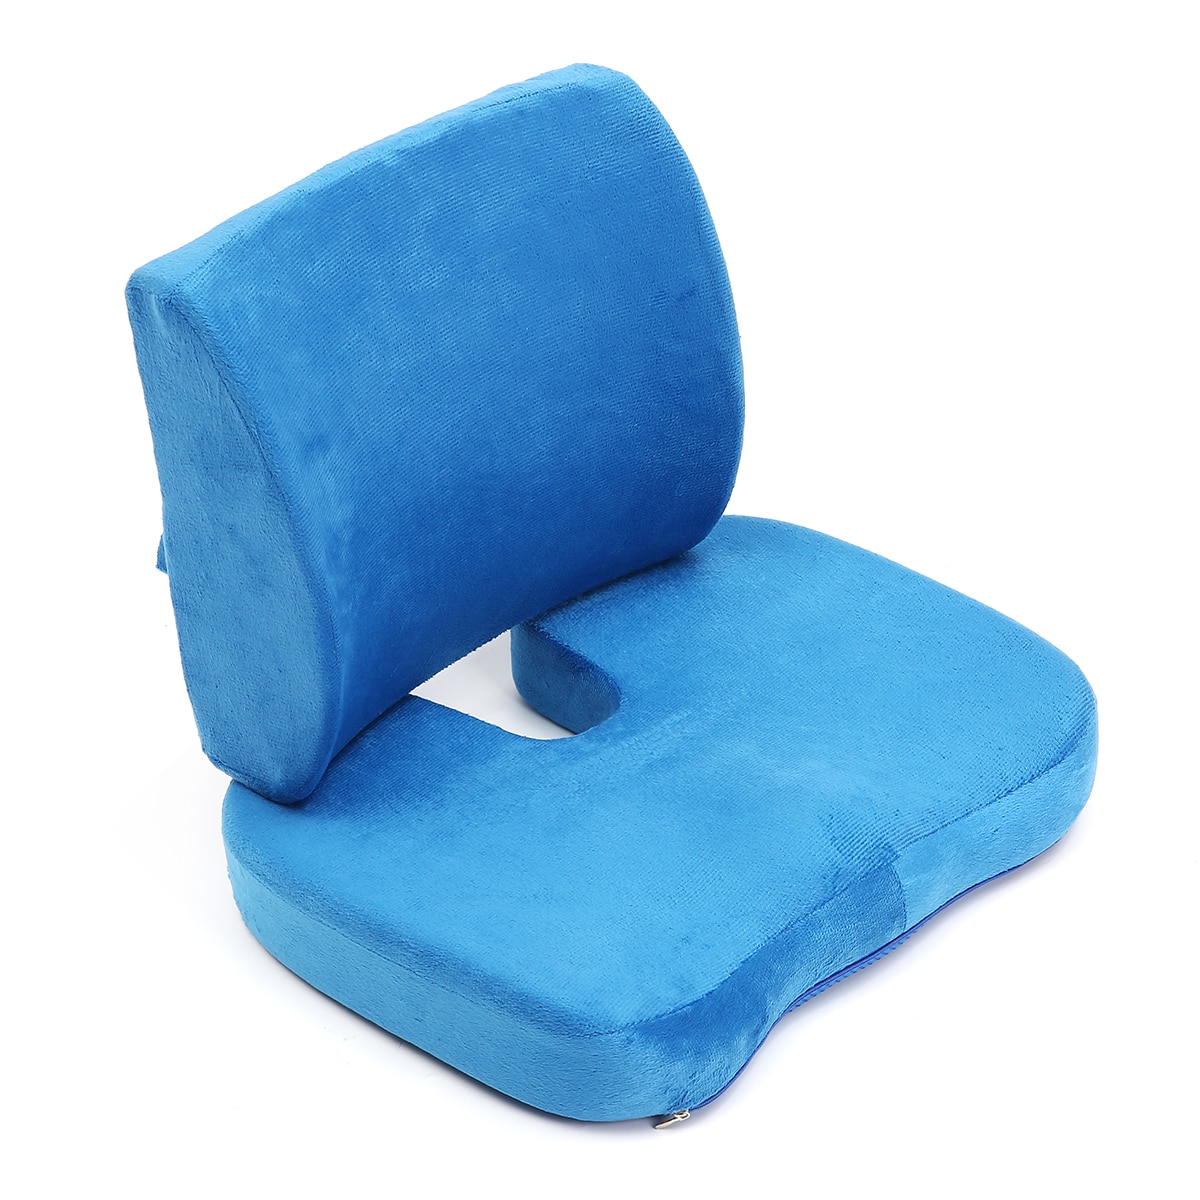 KWANSHOP 2pcs Premium Memory Foam Seat Cushion Lumbar Back Support Home ...